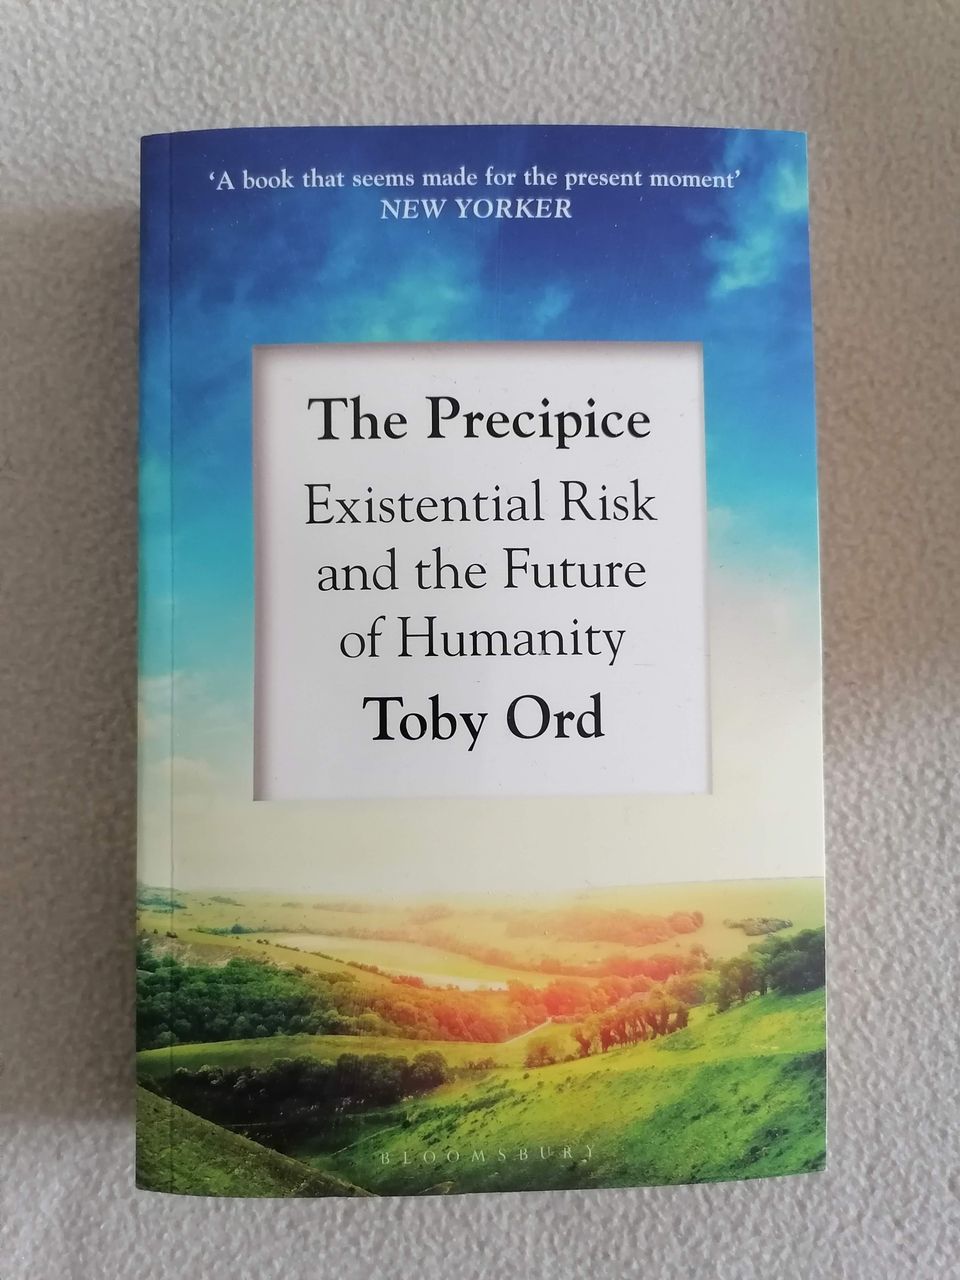 The Precipice by Toby Ord book